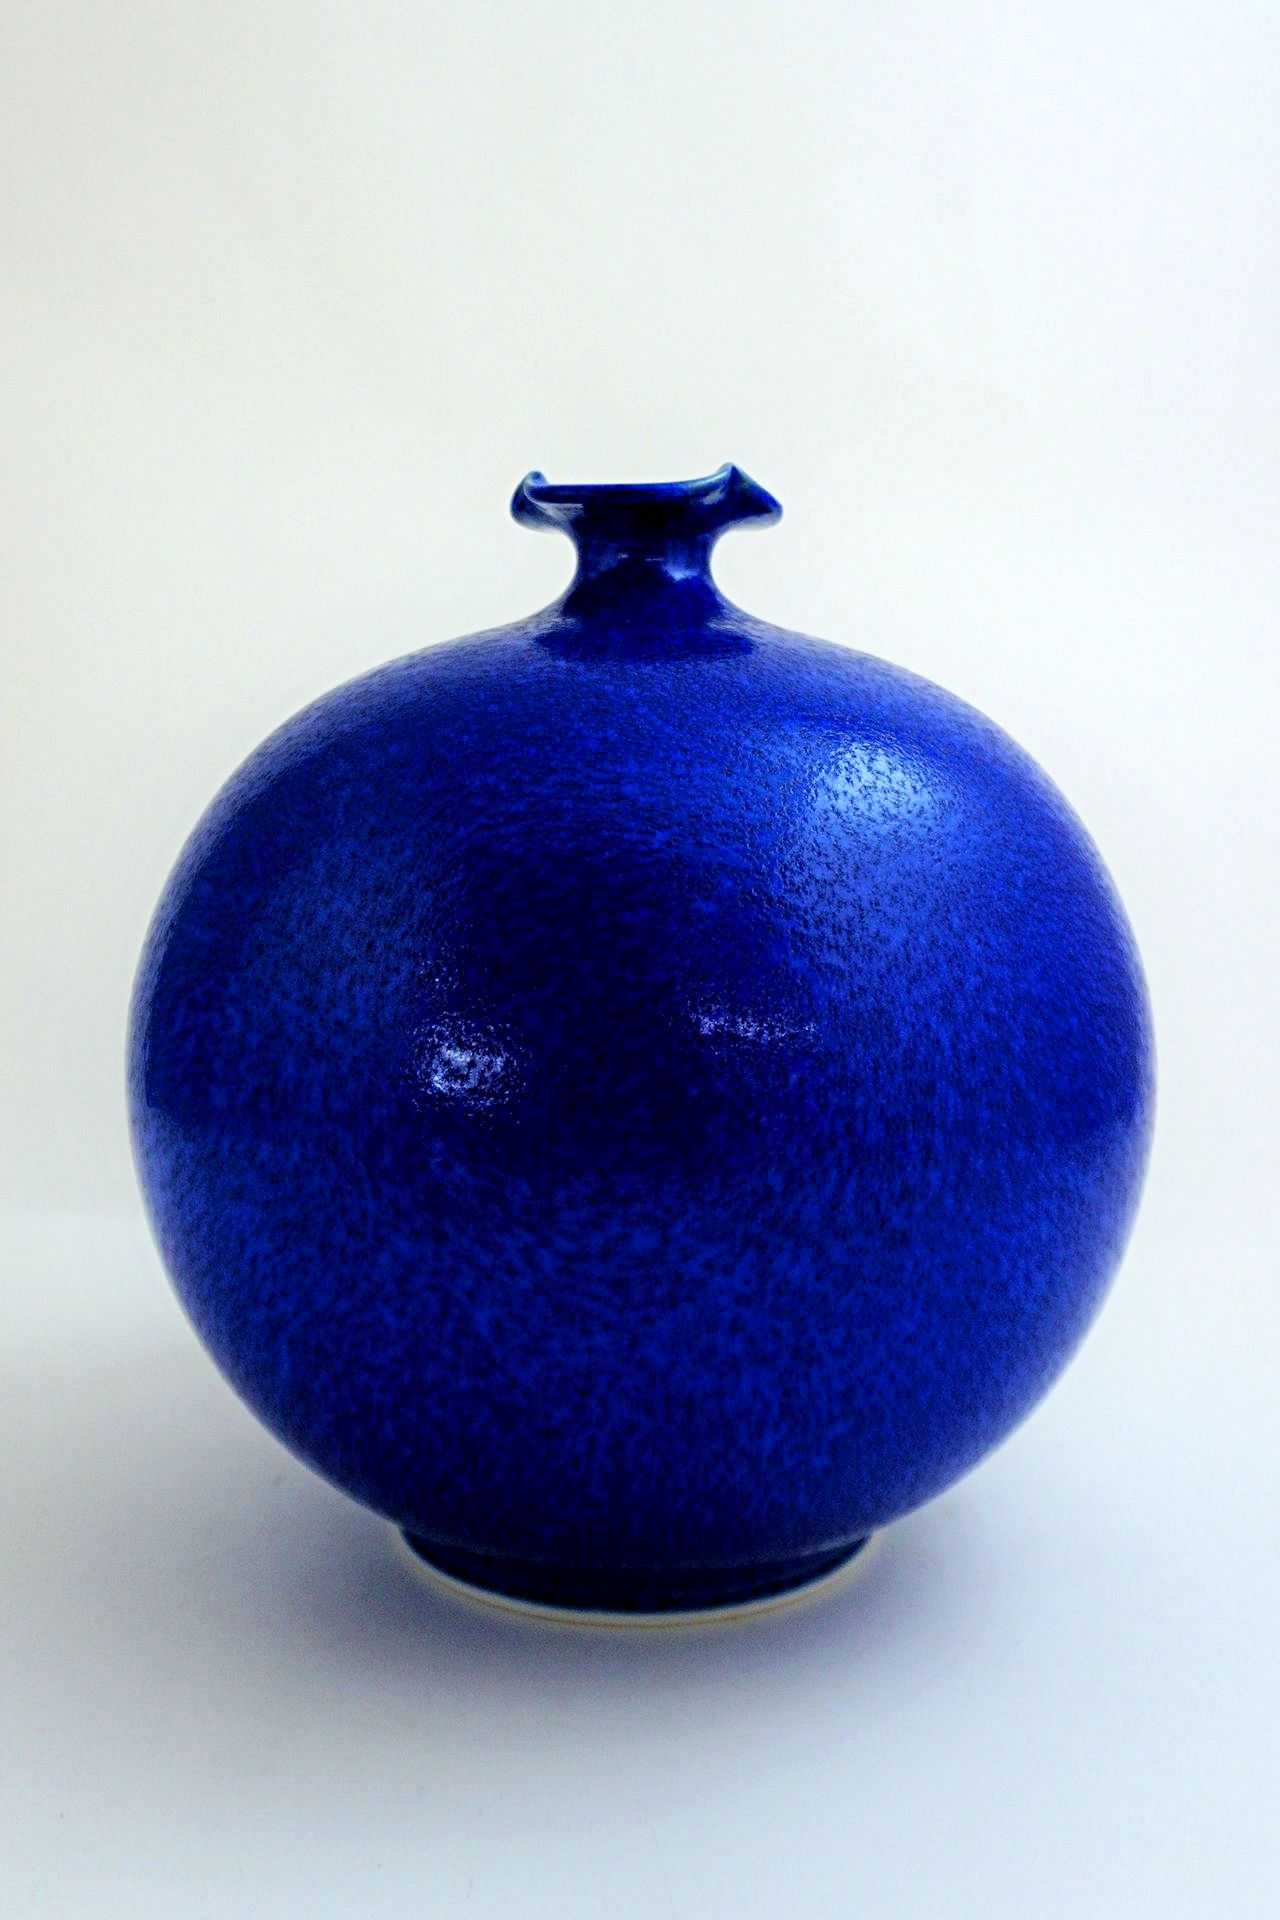 Flower vessel, Ruri water drop vase Japanese Ceramics